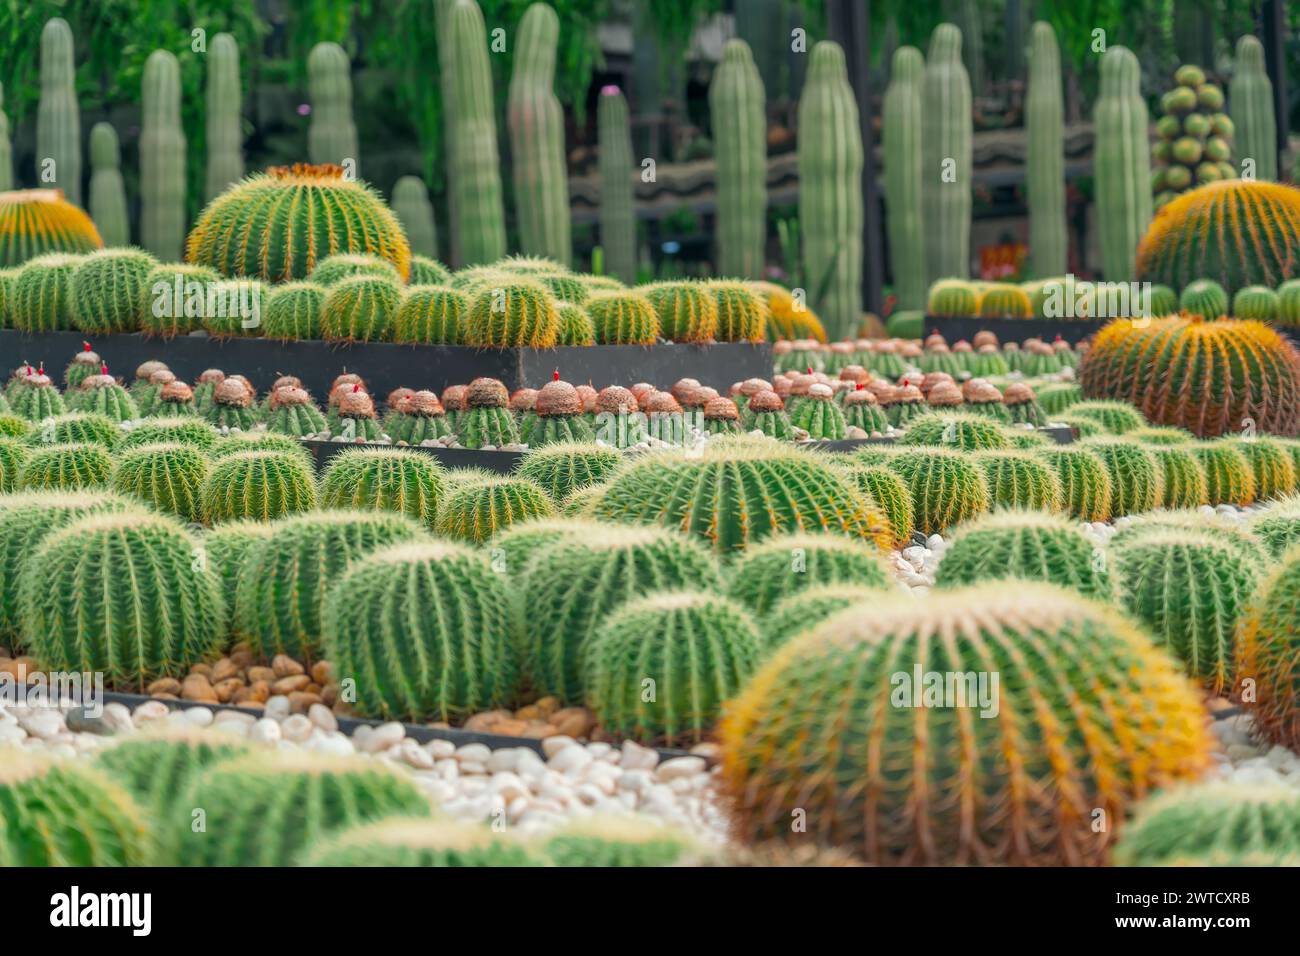 Large variety of cacti echinocactus grusonii, Melocactus, in garden arid climate. Stock Photo